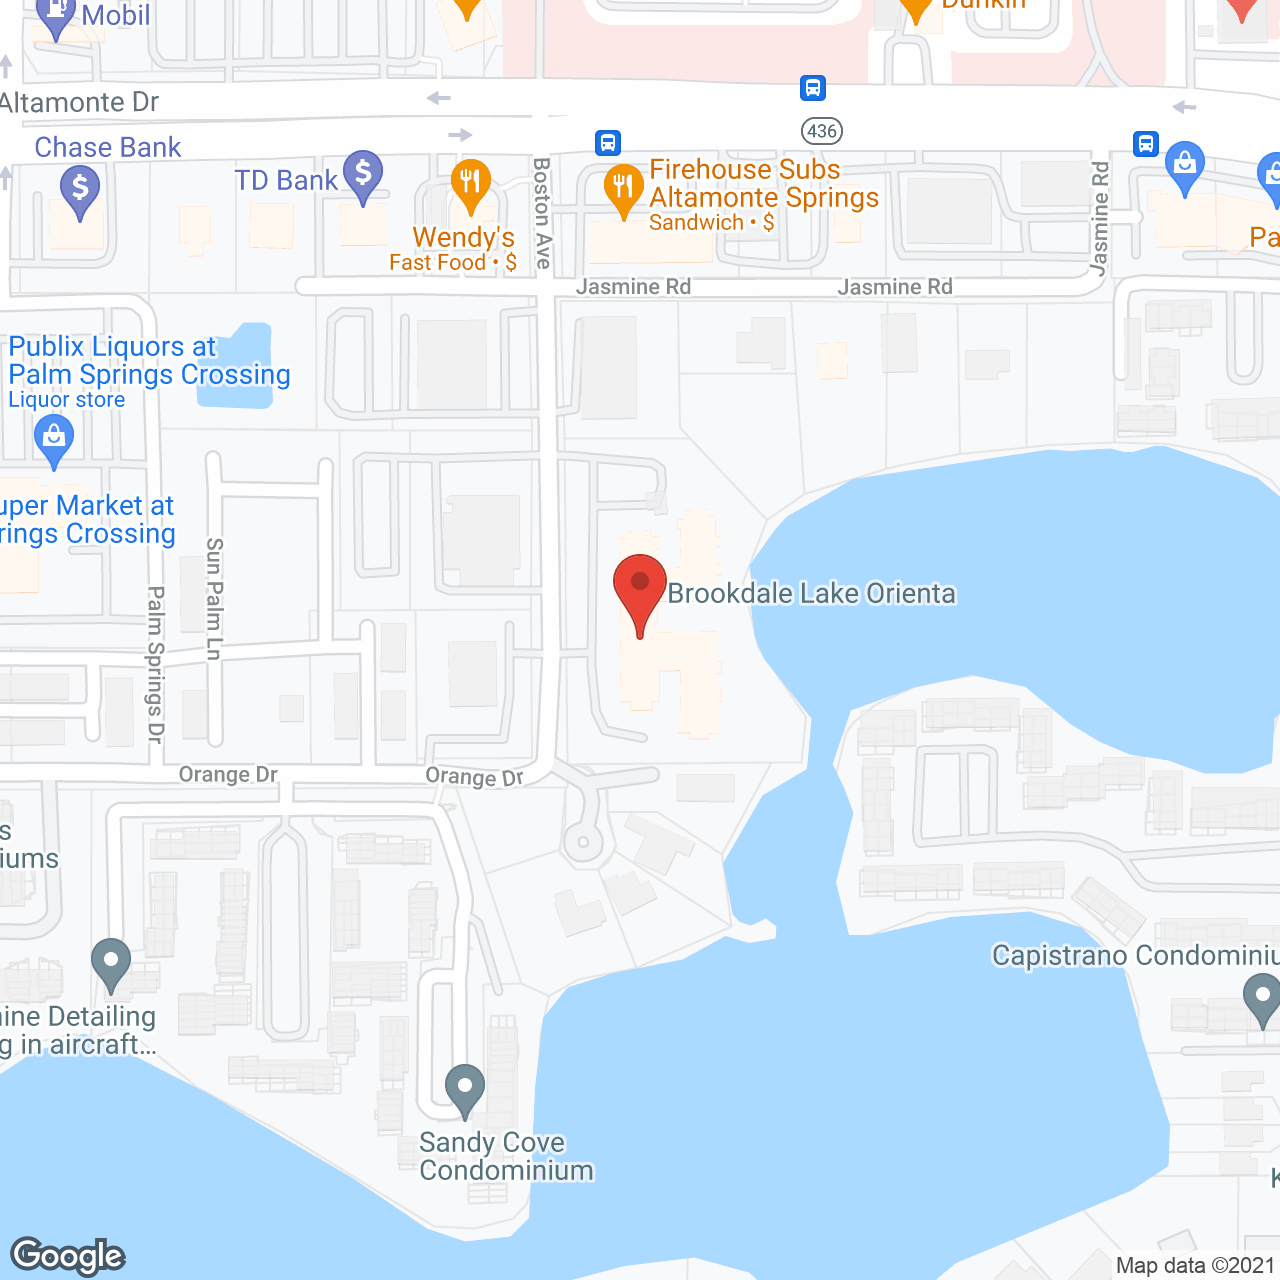 Chancellor Park in google map